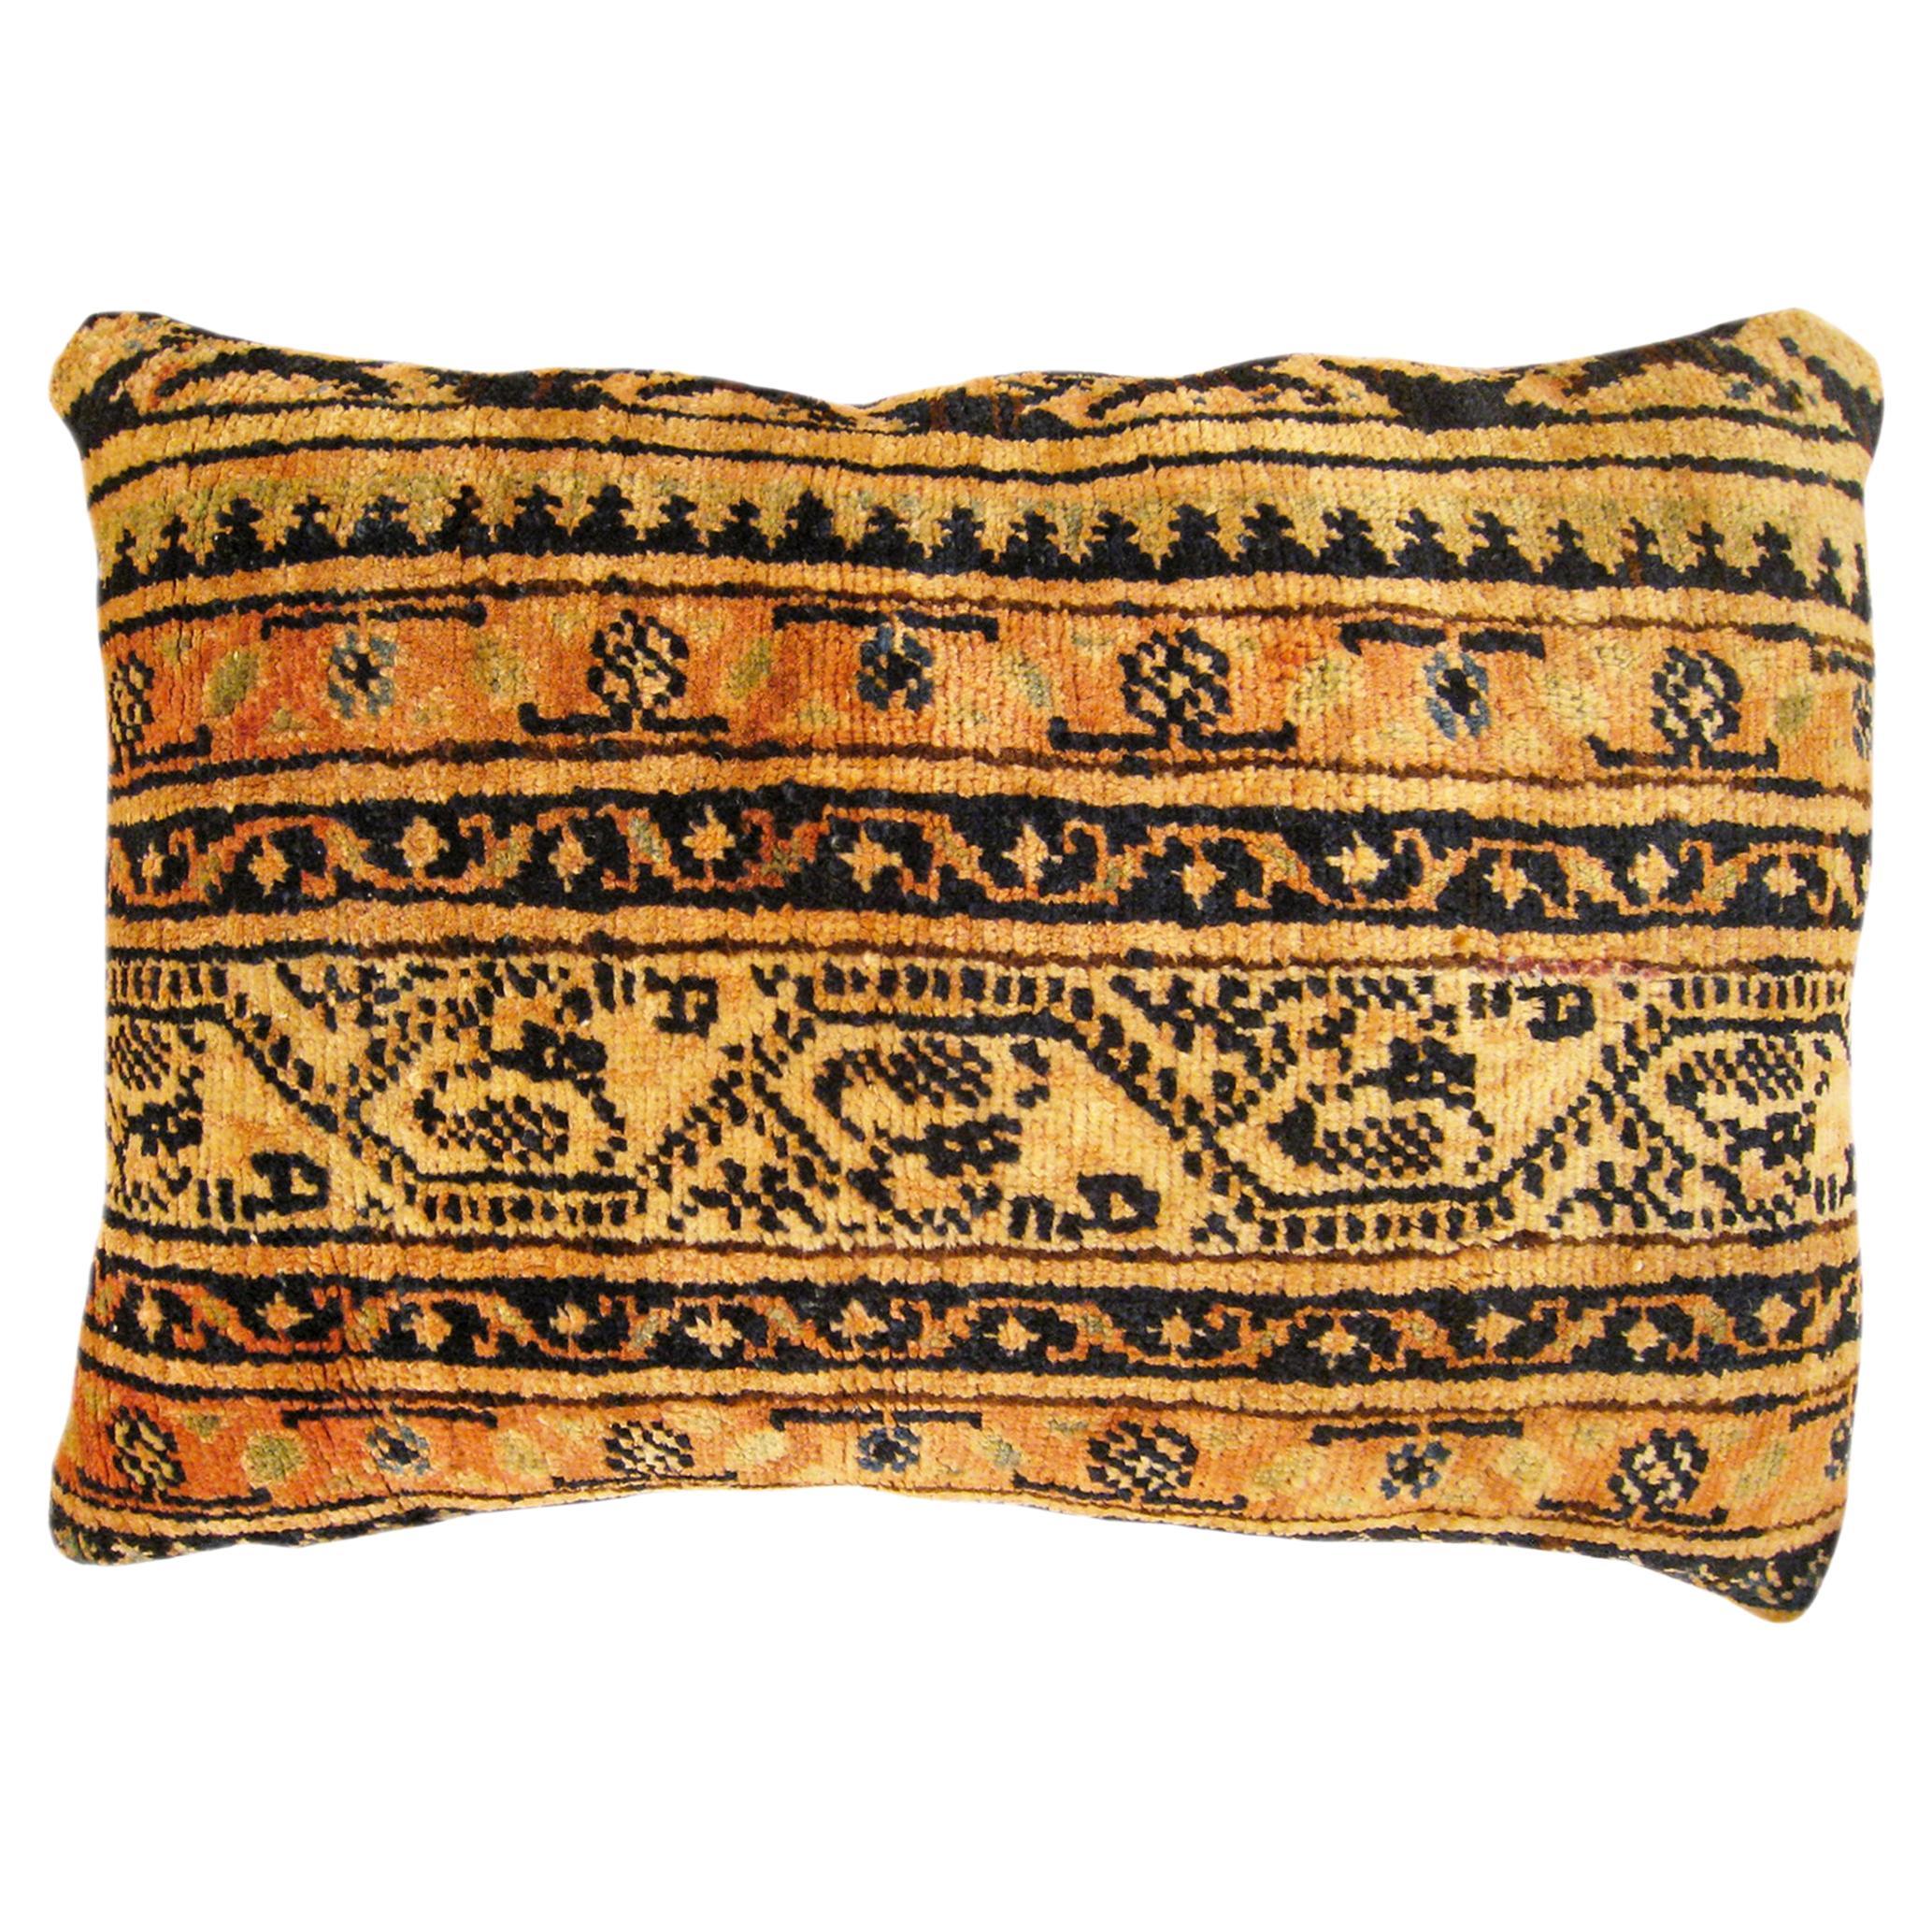 Decorative Antique Persian Saraband Carpet Pillow with a Paisley Design Allover